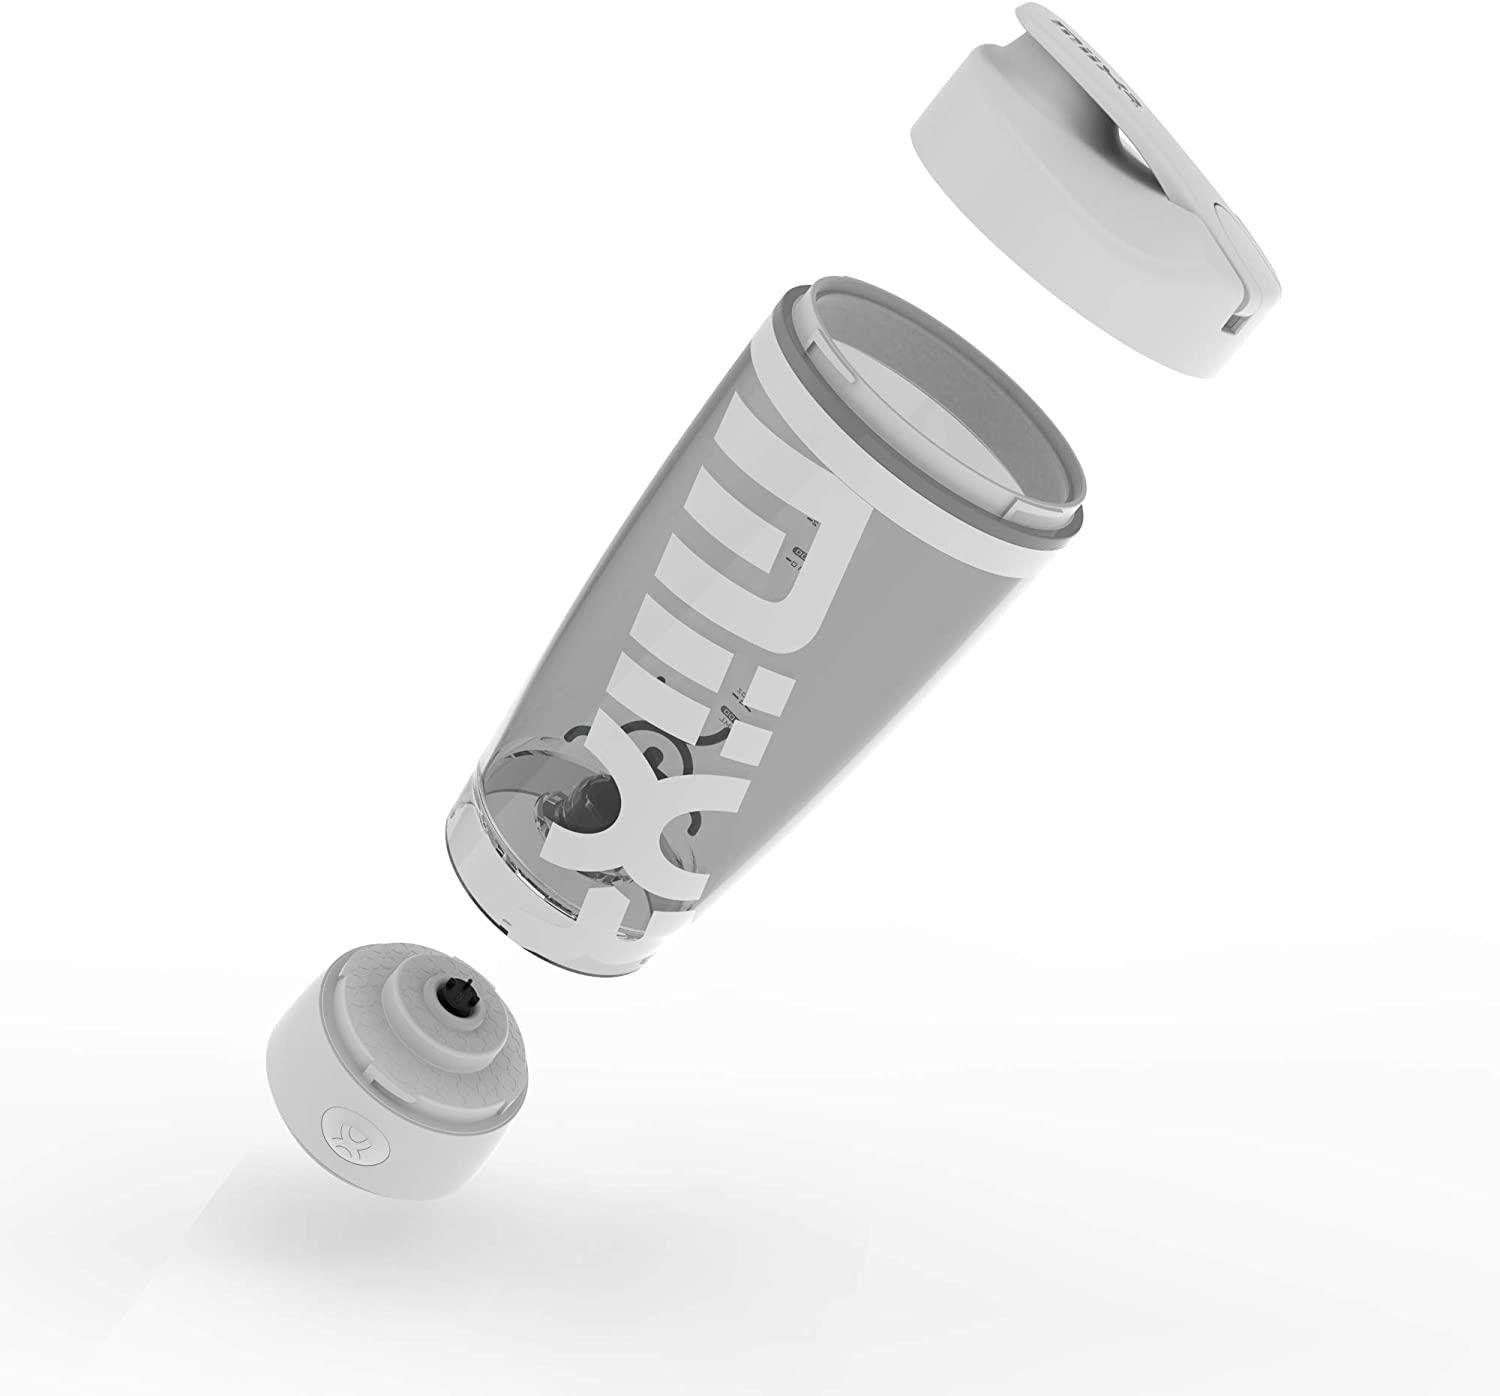  Promixx Original Shaker Bottle - Battery-powered for